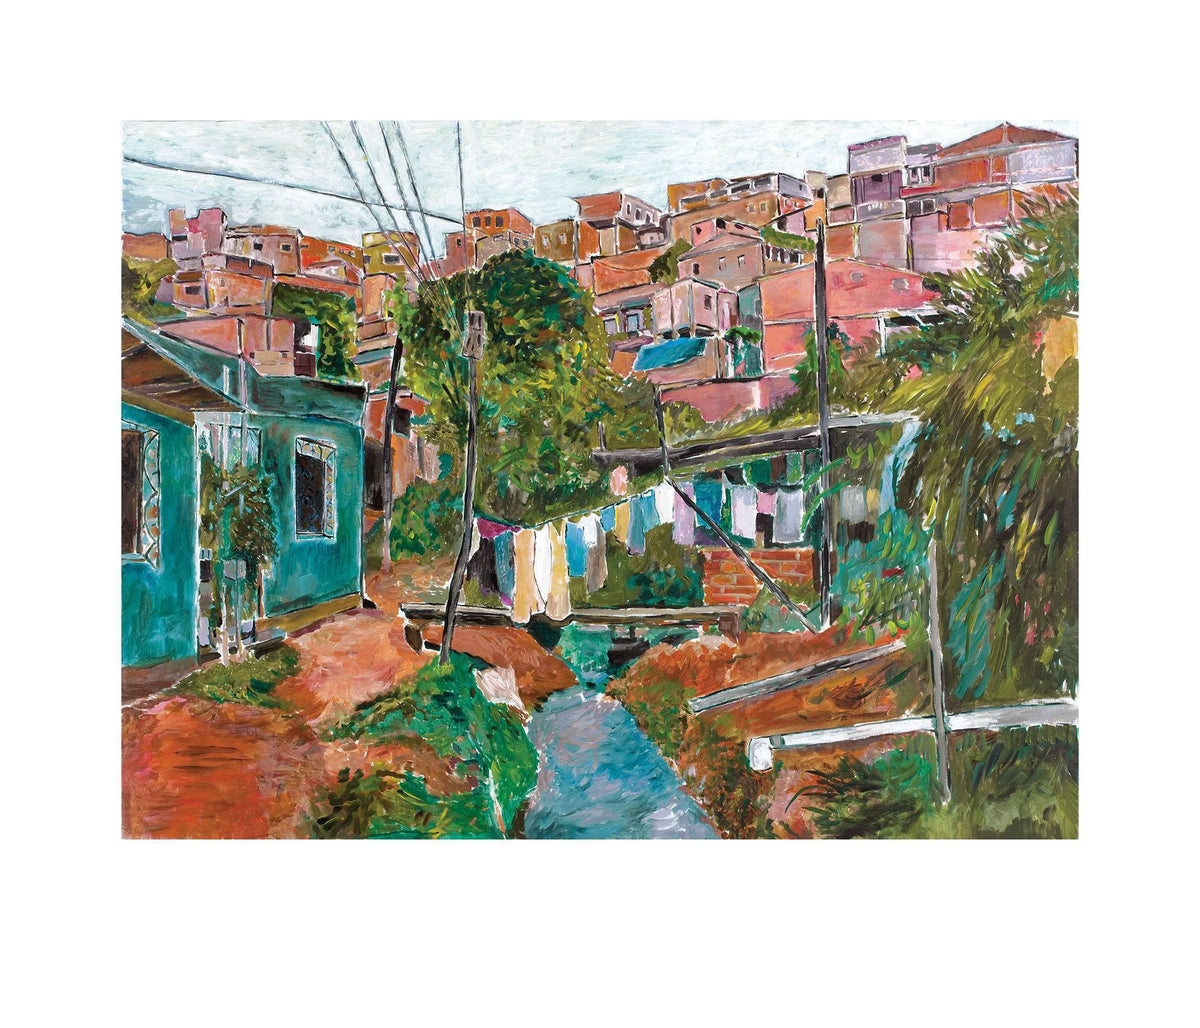 Favela Villa Broncas - SOLD OUT Bob Dylan